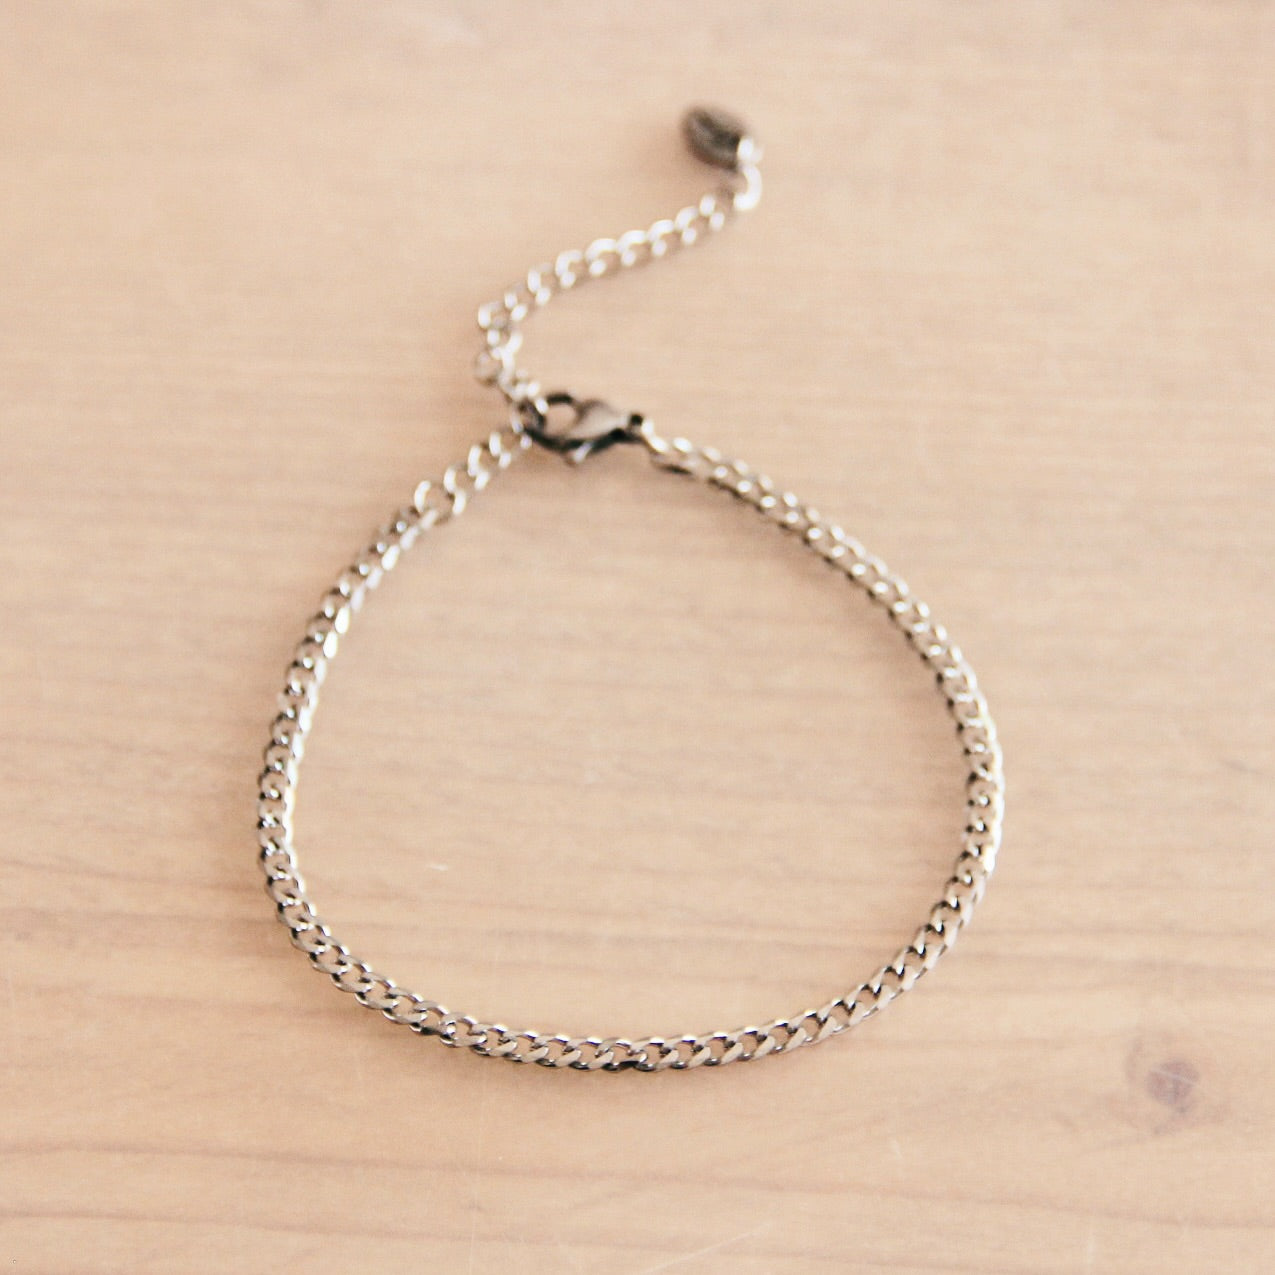 The Jula Small Chain Bracelet